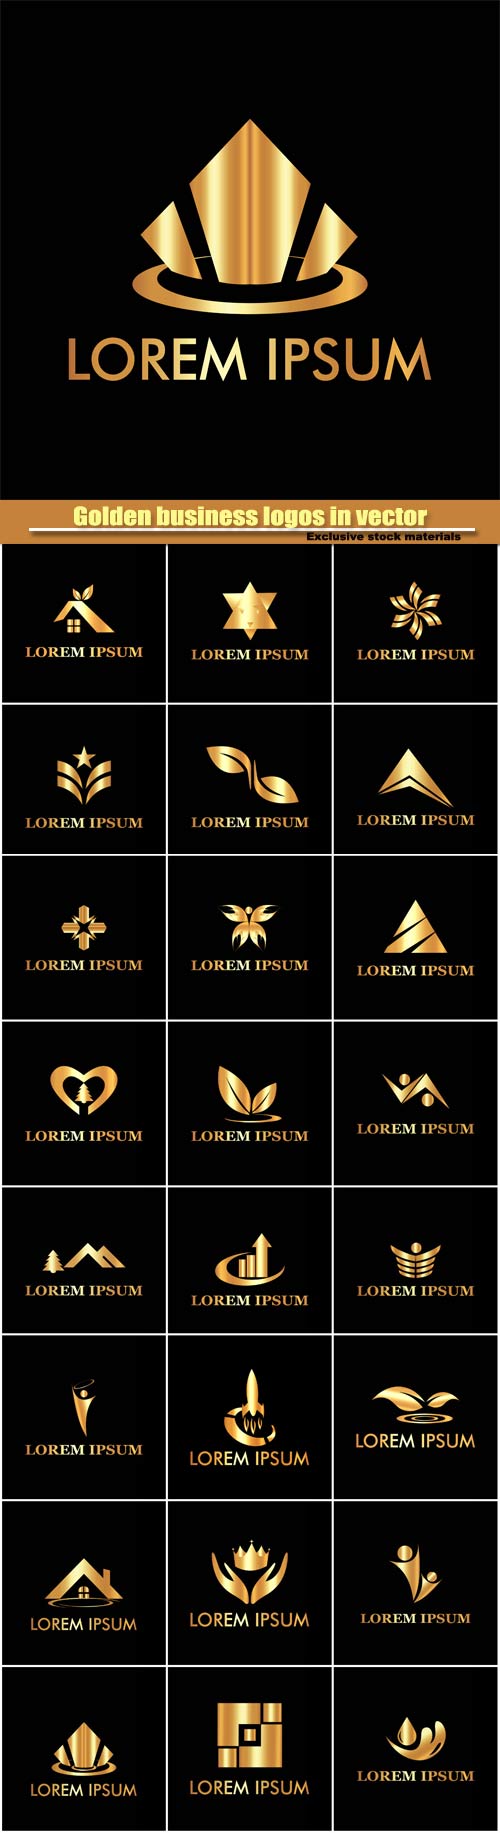 Stylish golden business logos in vector